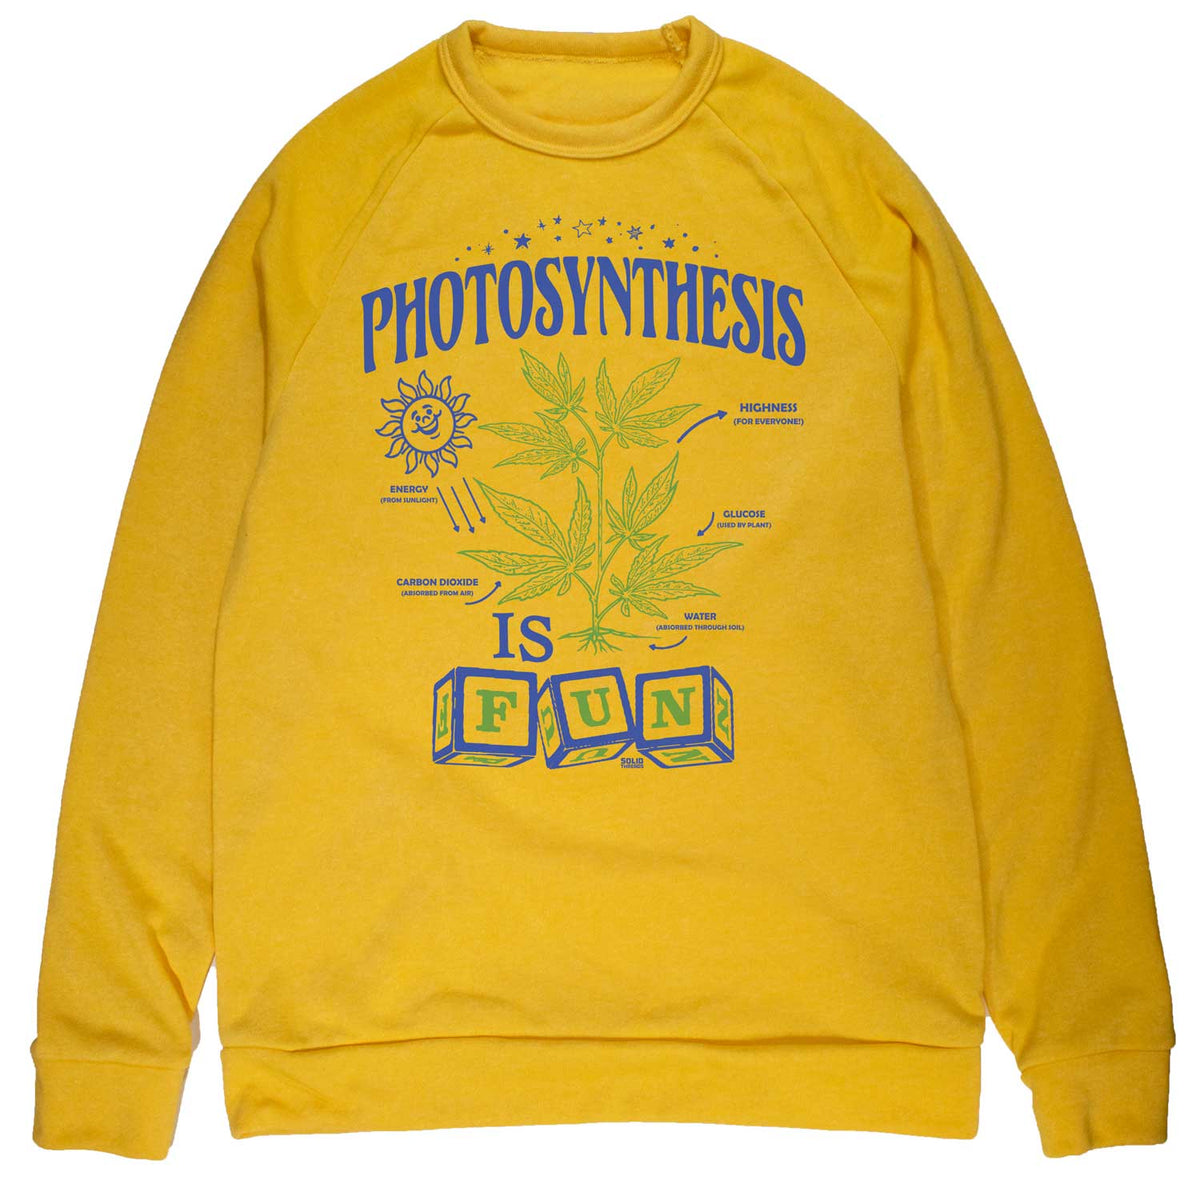 Unisex Photosynthesis is Fun Vintage Inspired Fleece Crewneck Sweatshirt | Retro Marijuana Graphic Pullover | Solid Threads